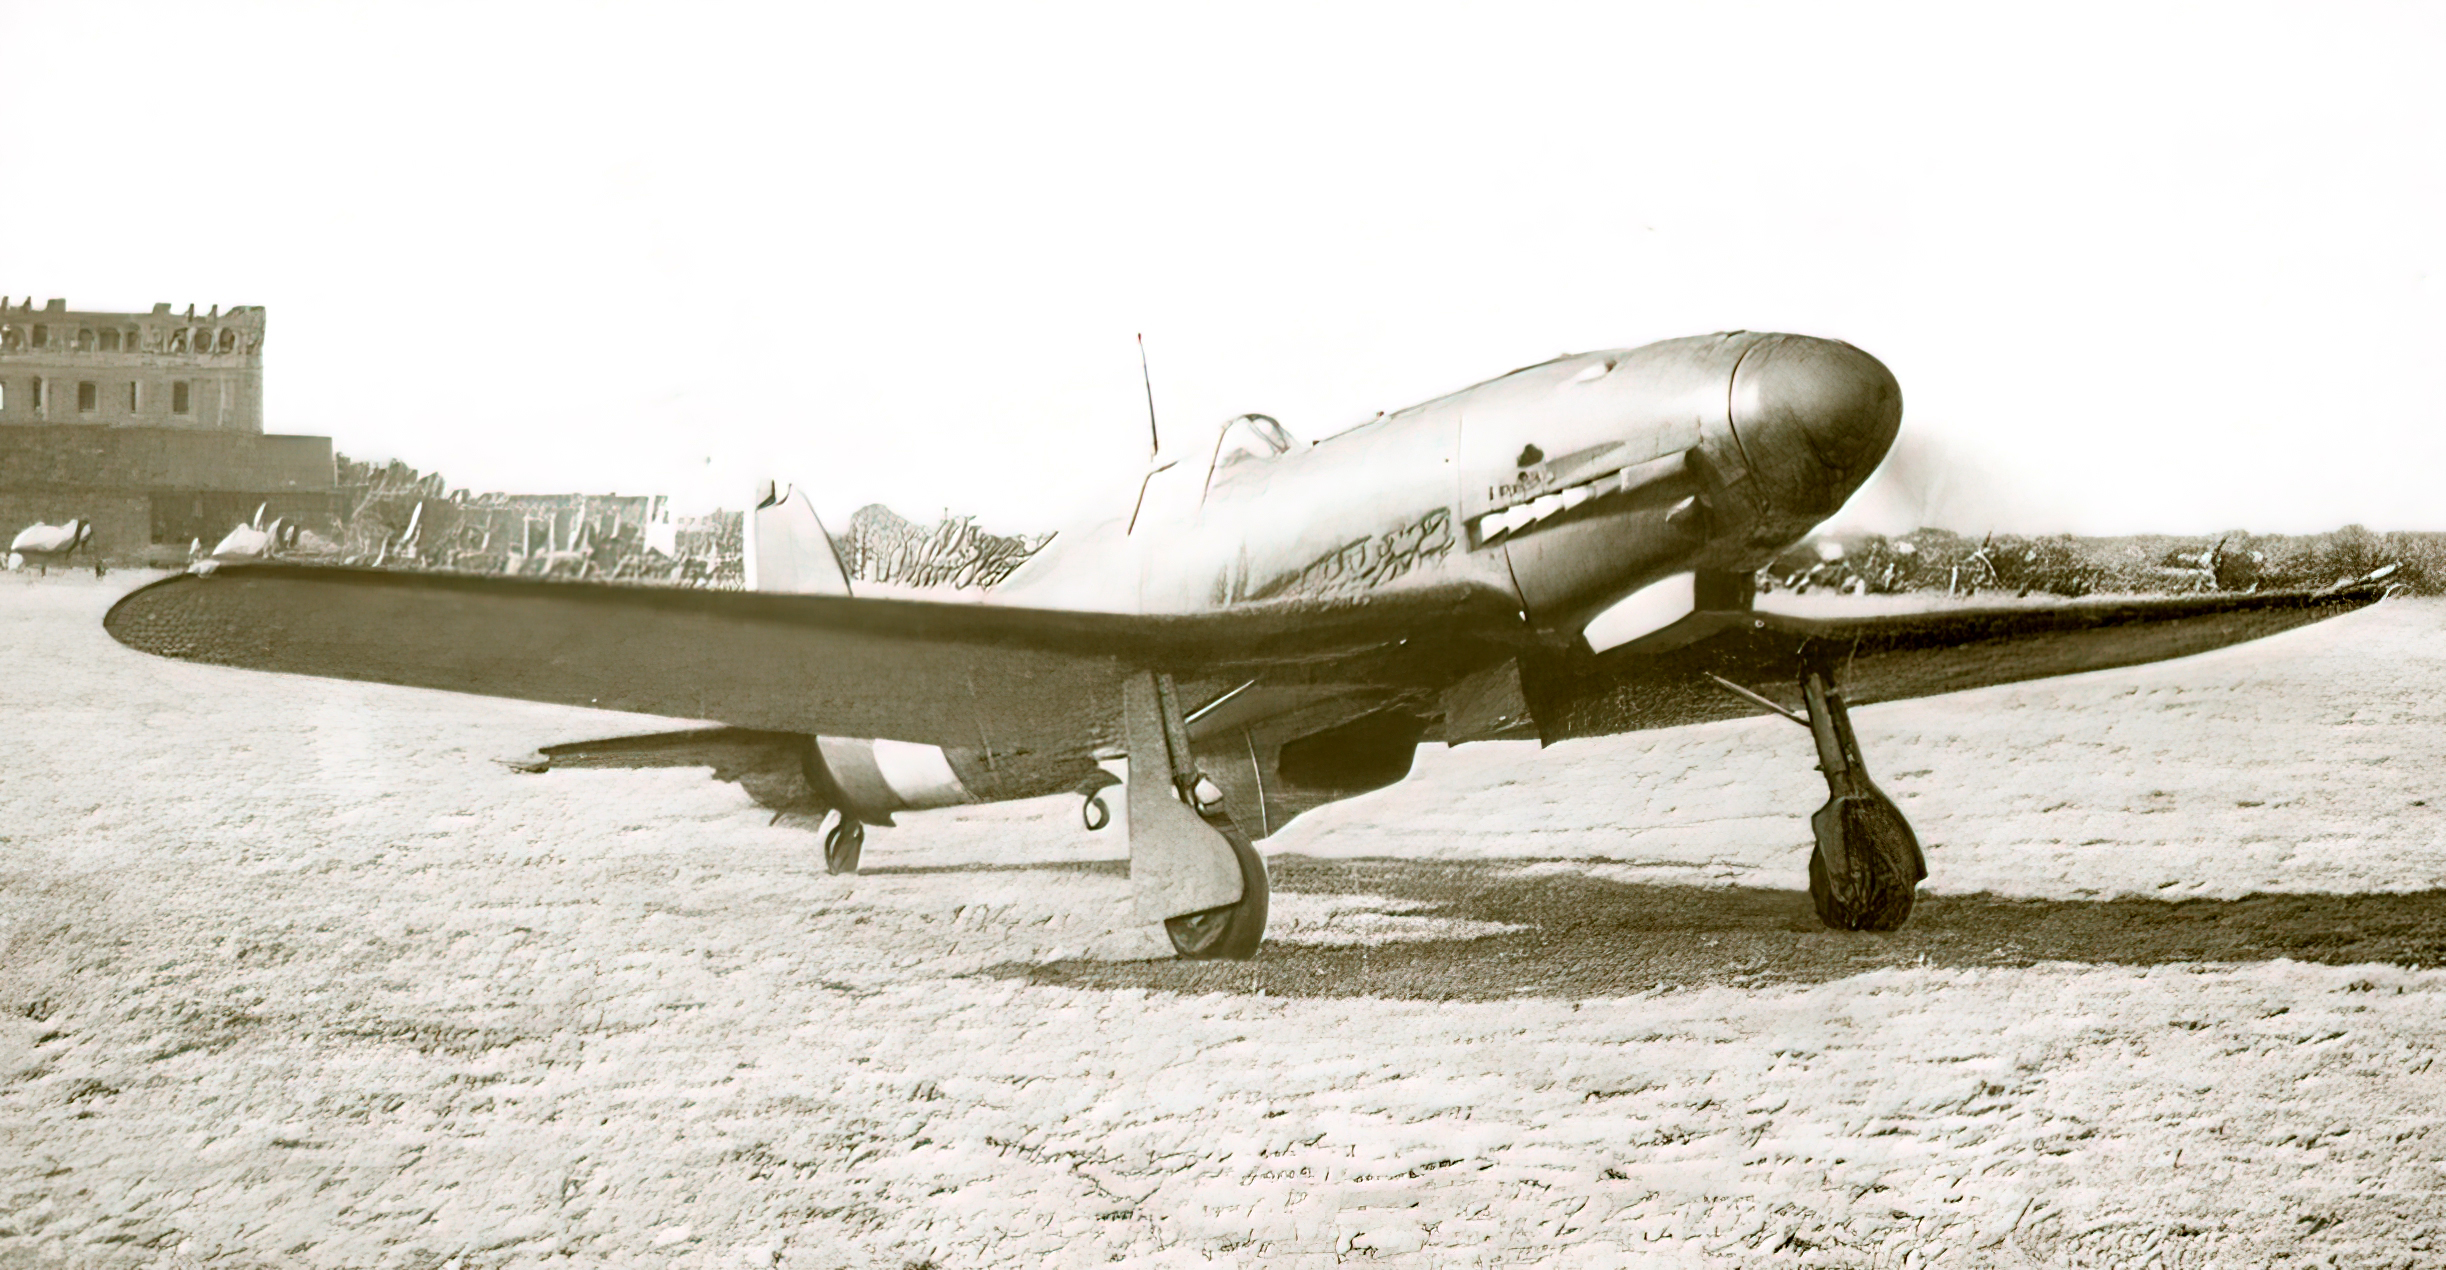 RA Regia Aeronautica Fiat G55 Centauro 51 Stormo 20 Gruppo CT 353 Squadriglie Italy 1943 03